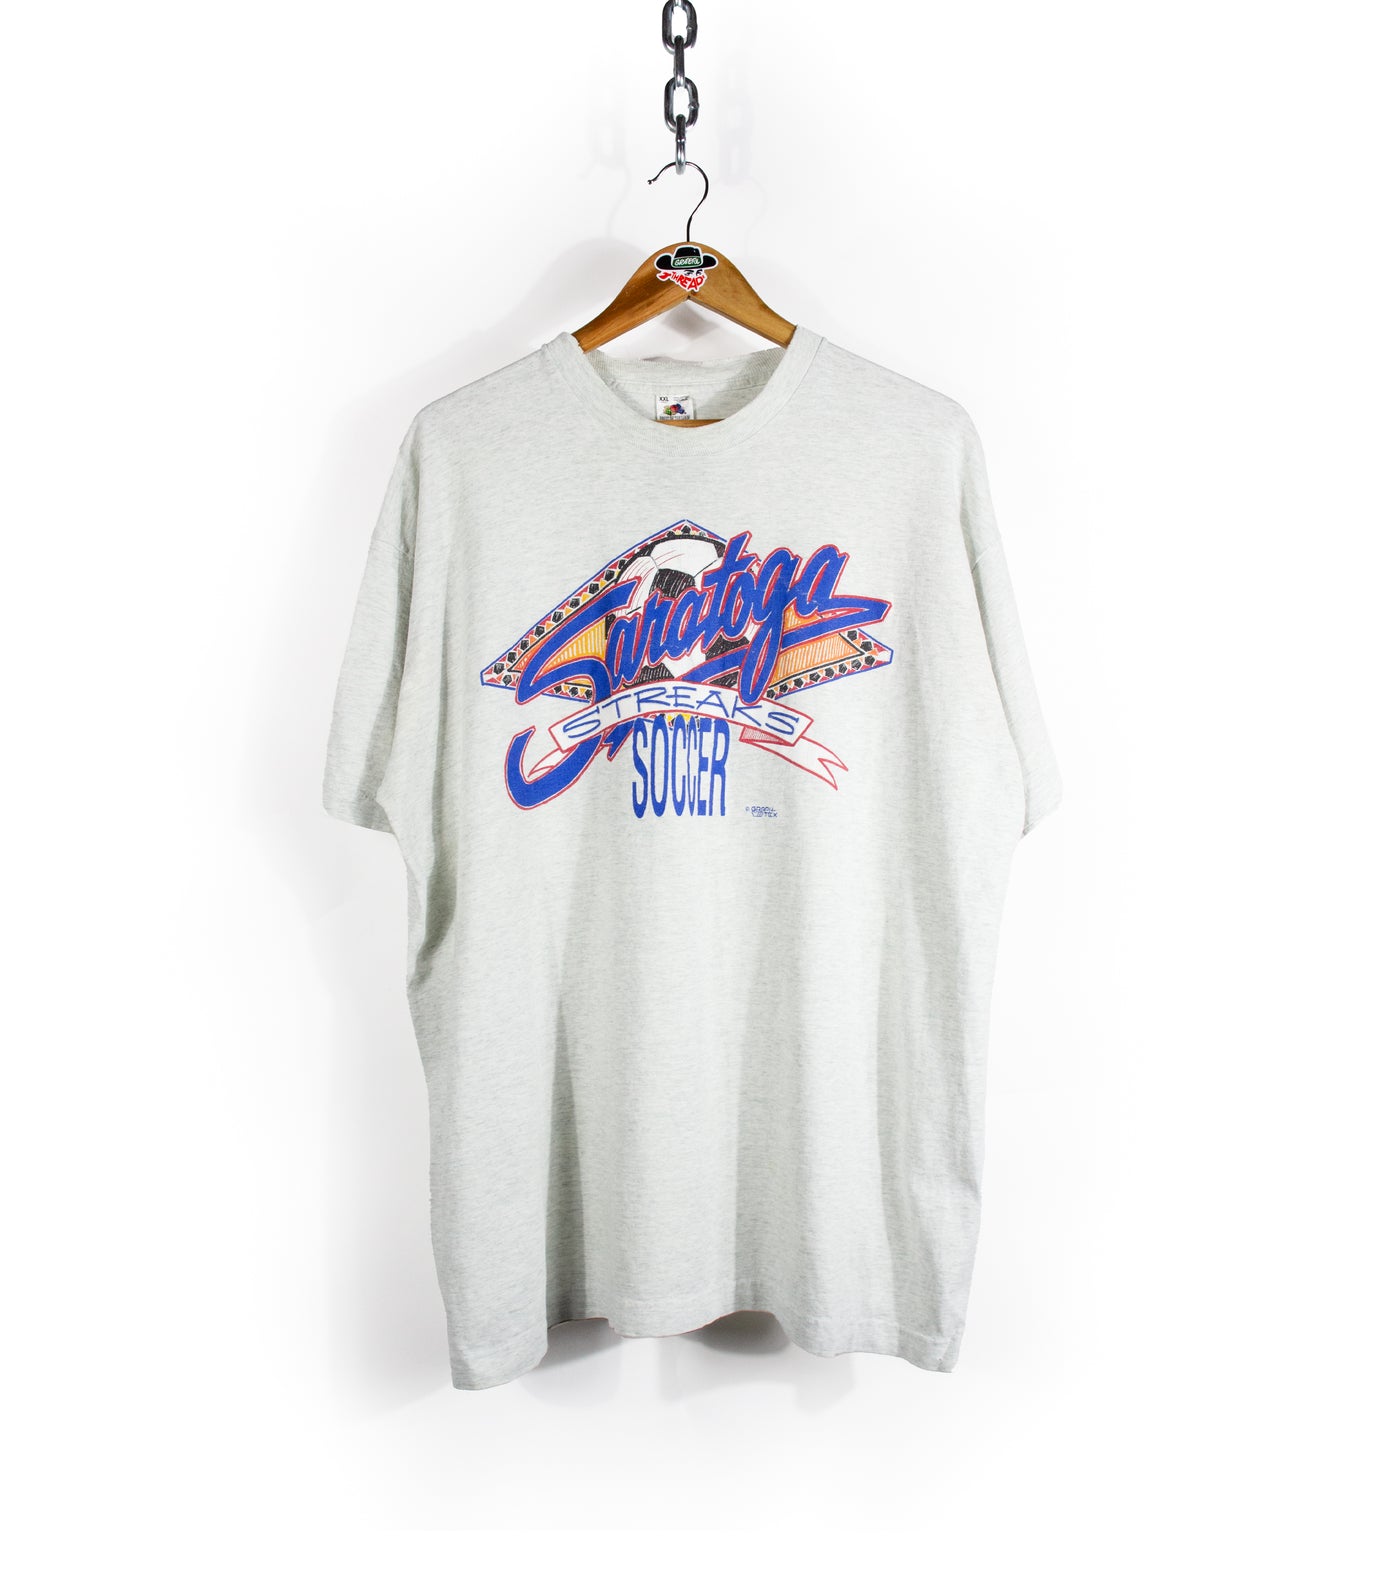 Vintage 90s Saratoga Streaks Soccer T-Shirt